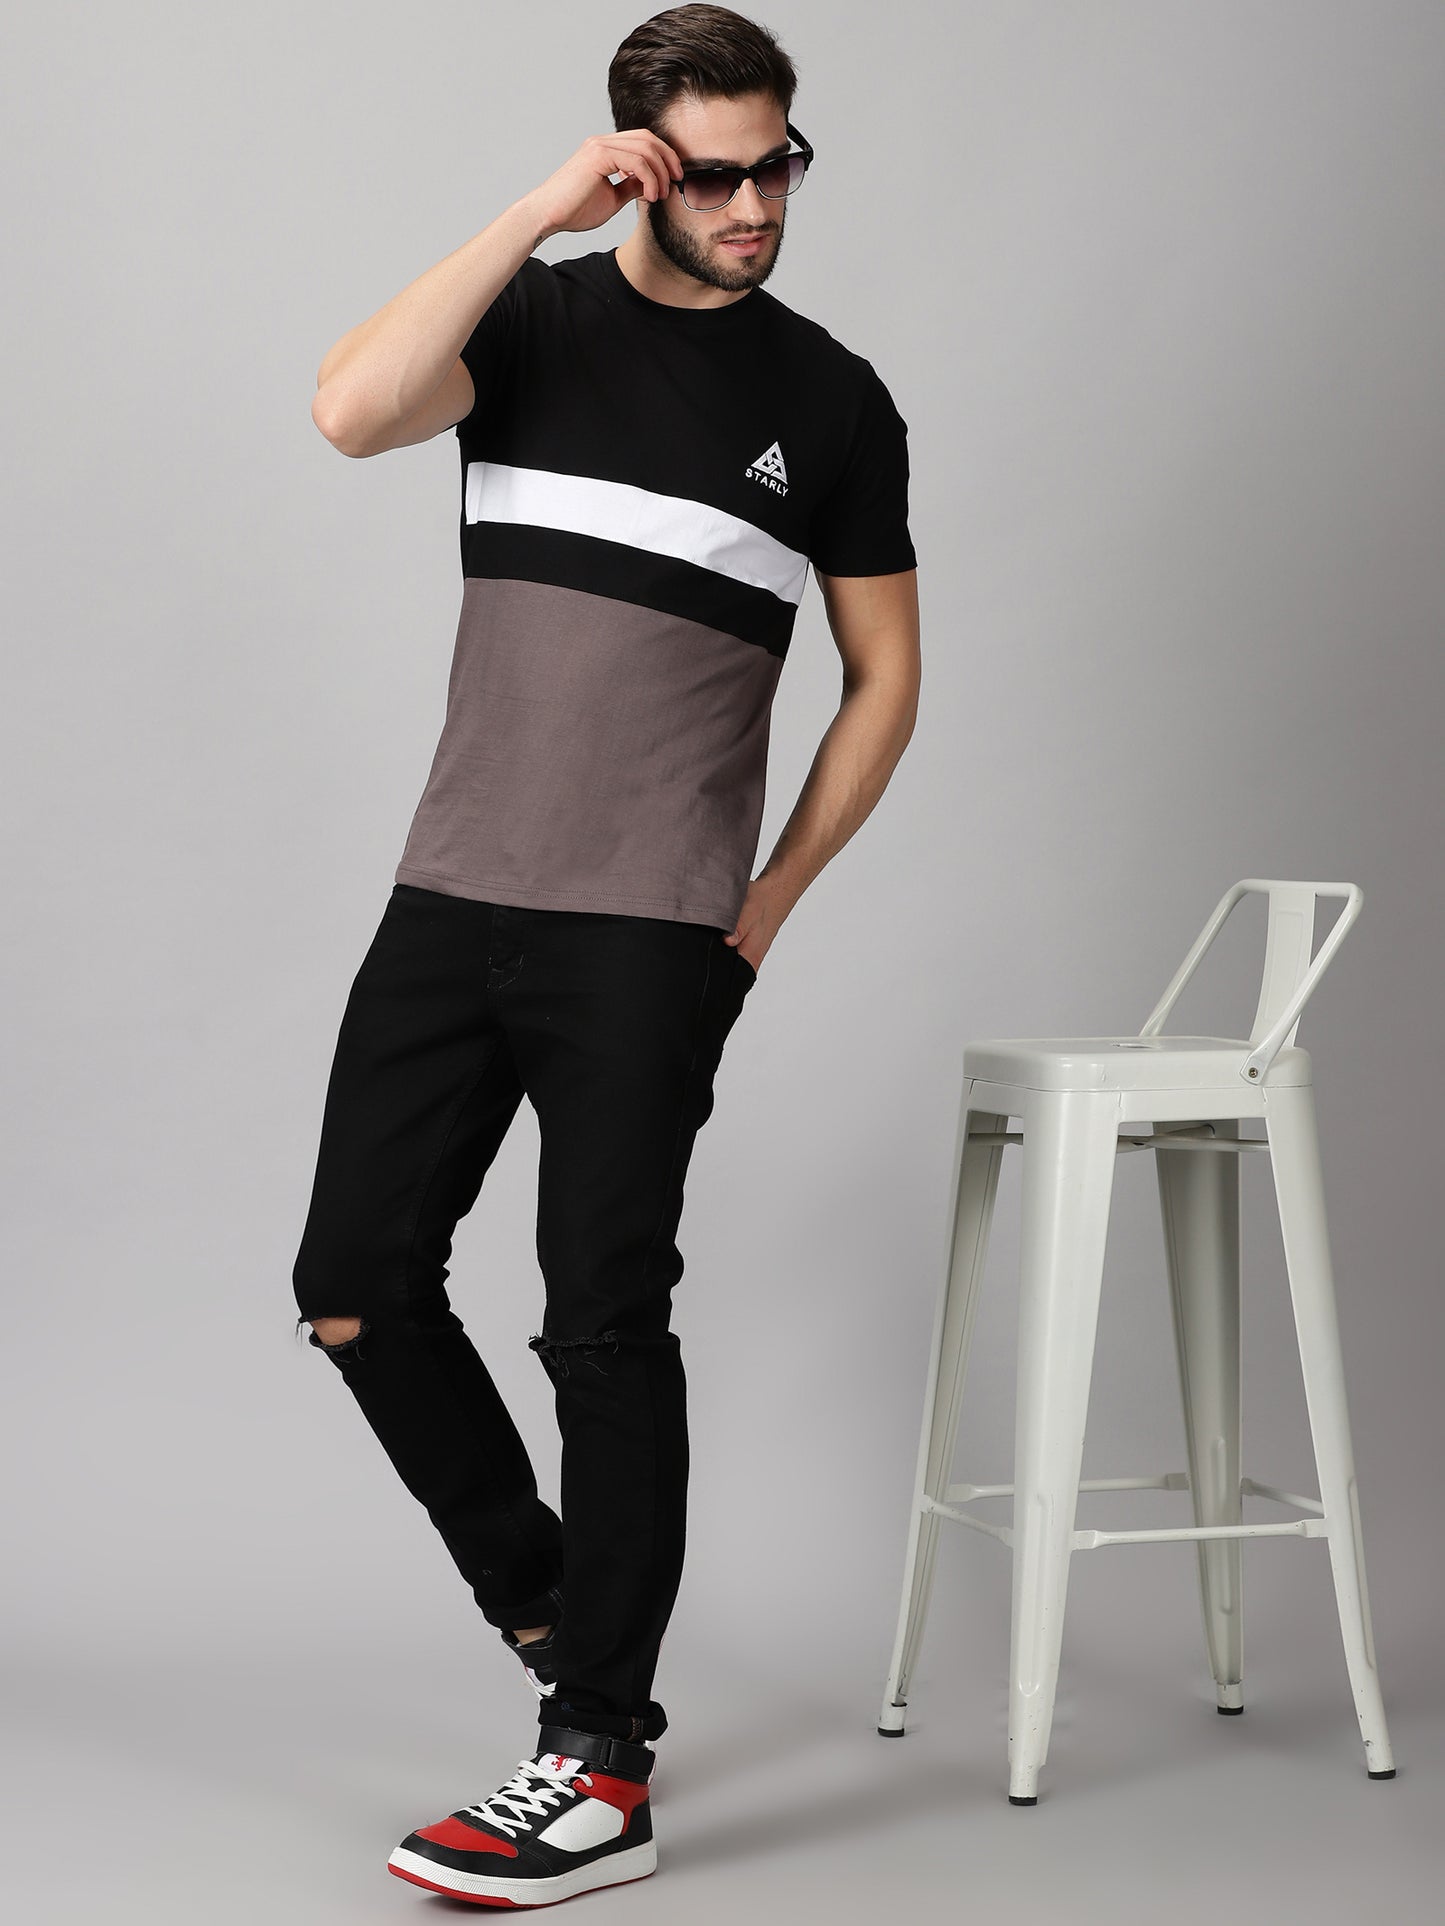 ColourBlocked T-Shirt: Black Grey